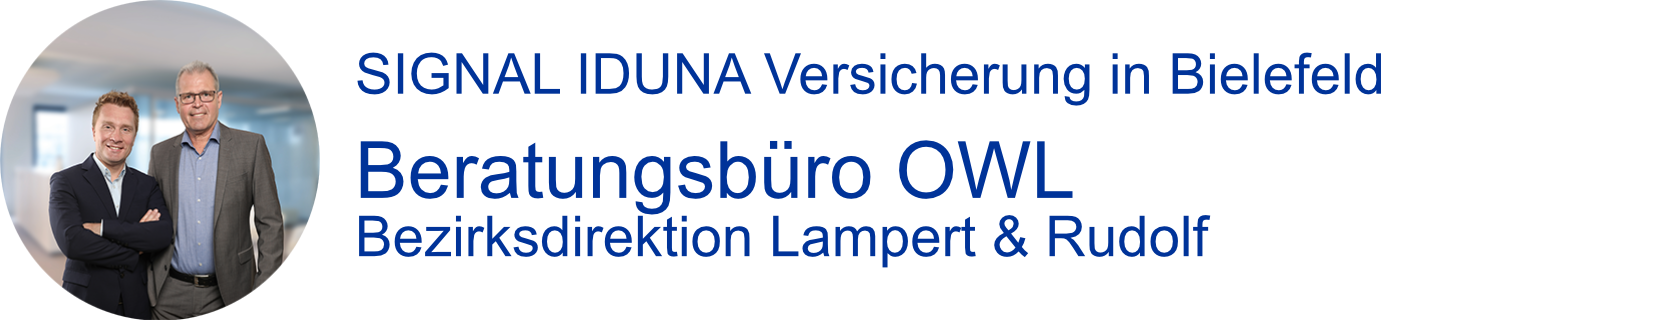 Signal Iduna - Beratungsbüro OWL - Bezirksdirektion Lampert & Rudolf